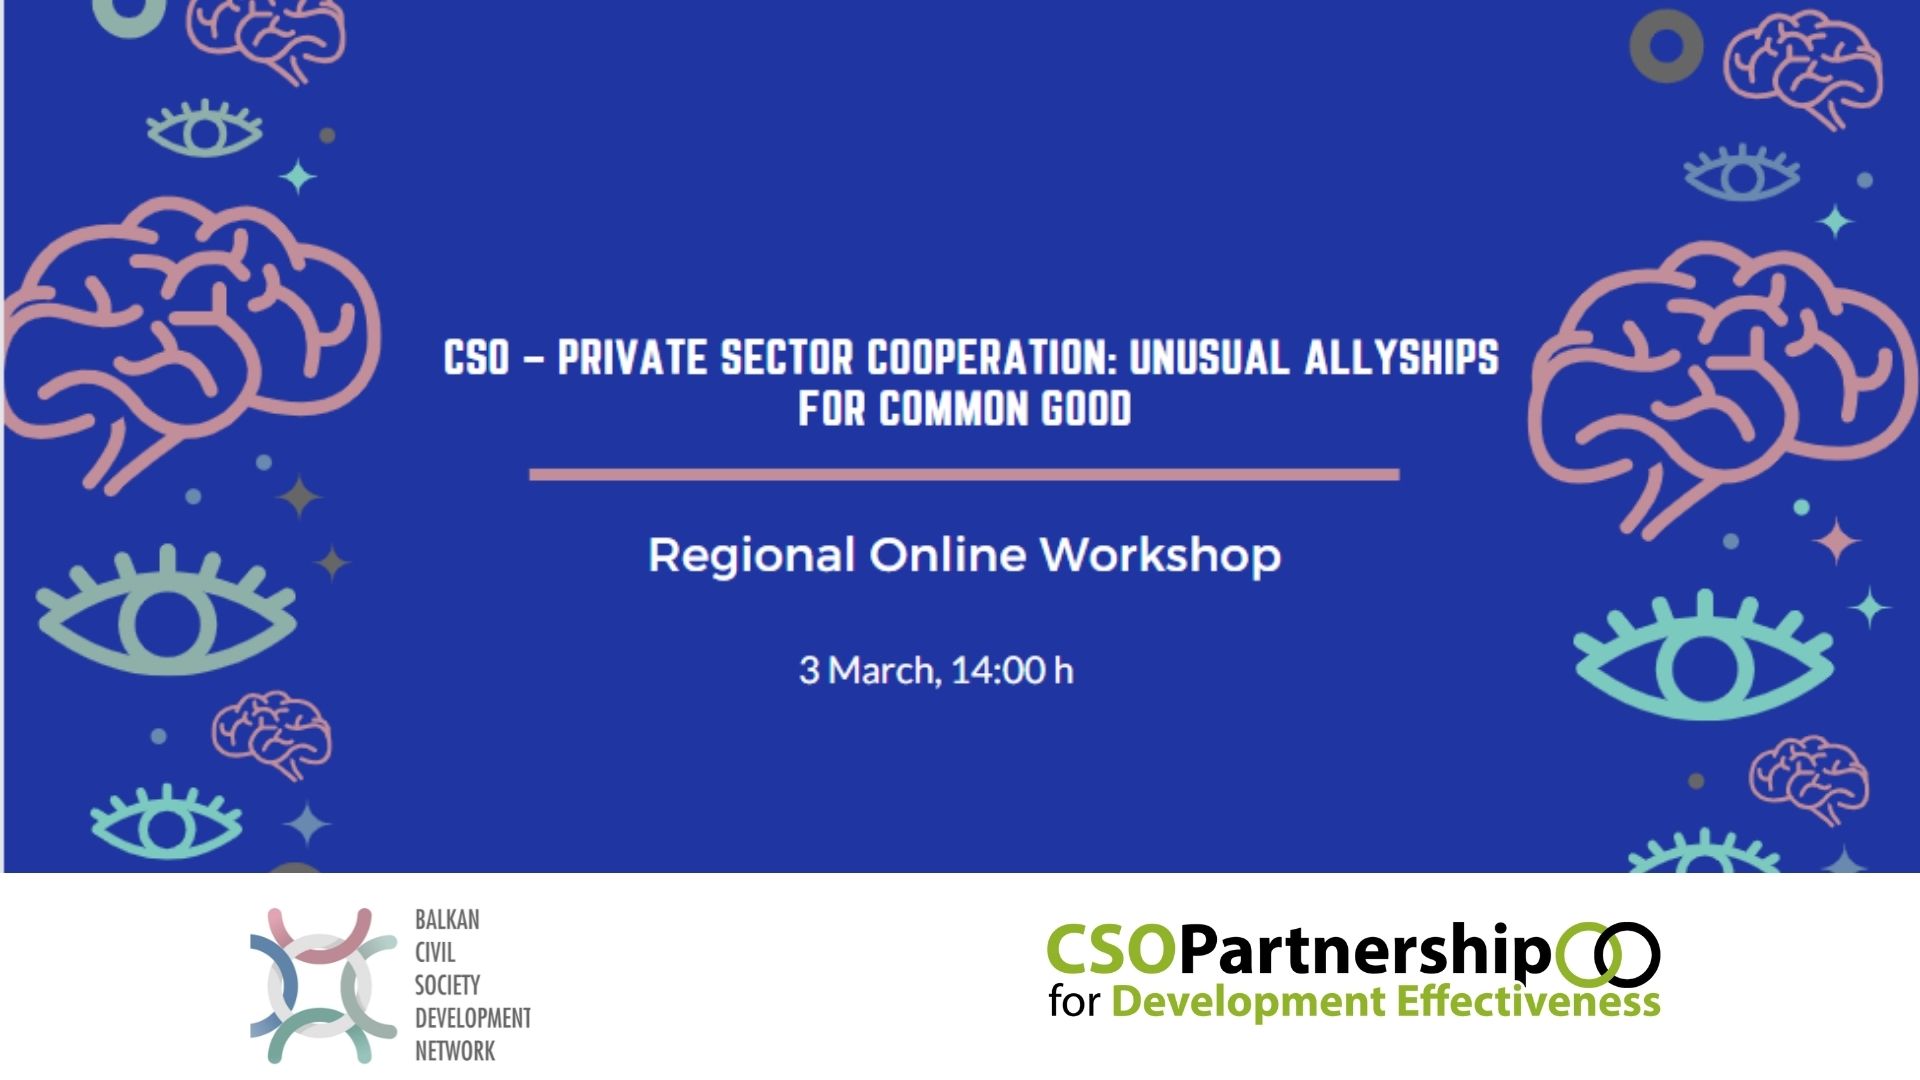 Balkan Civil Society Development Network_online regional workshop CSO-Private Sector Cooperation